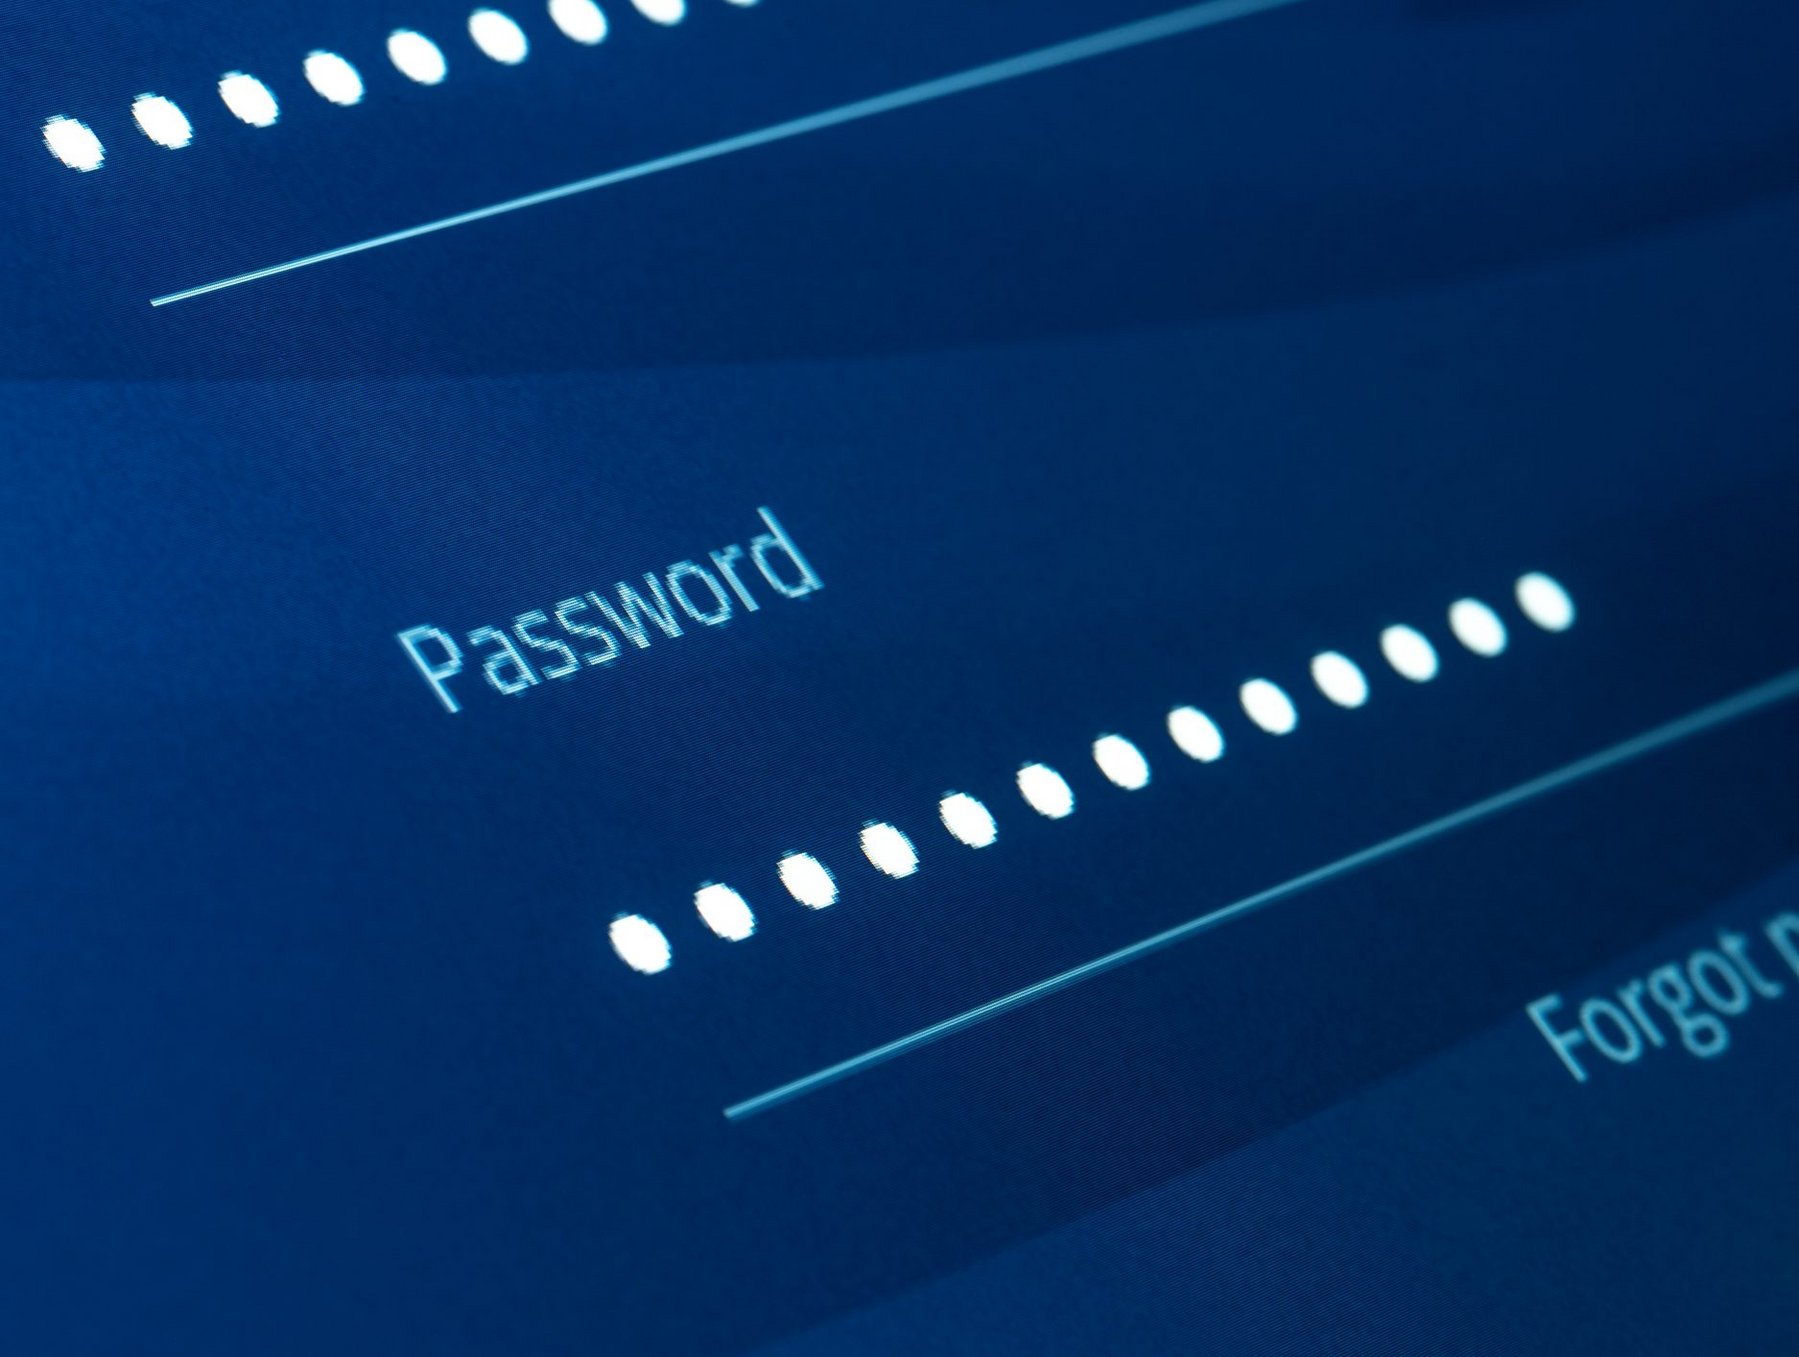 Use of passkeys expands as passwordless authentication push advances